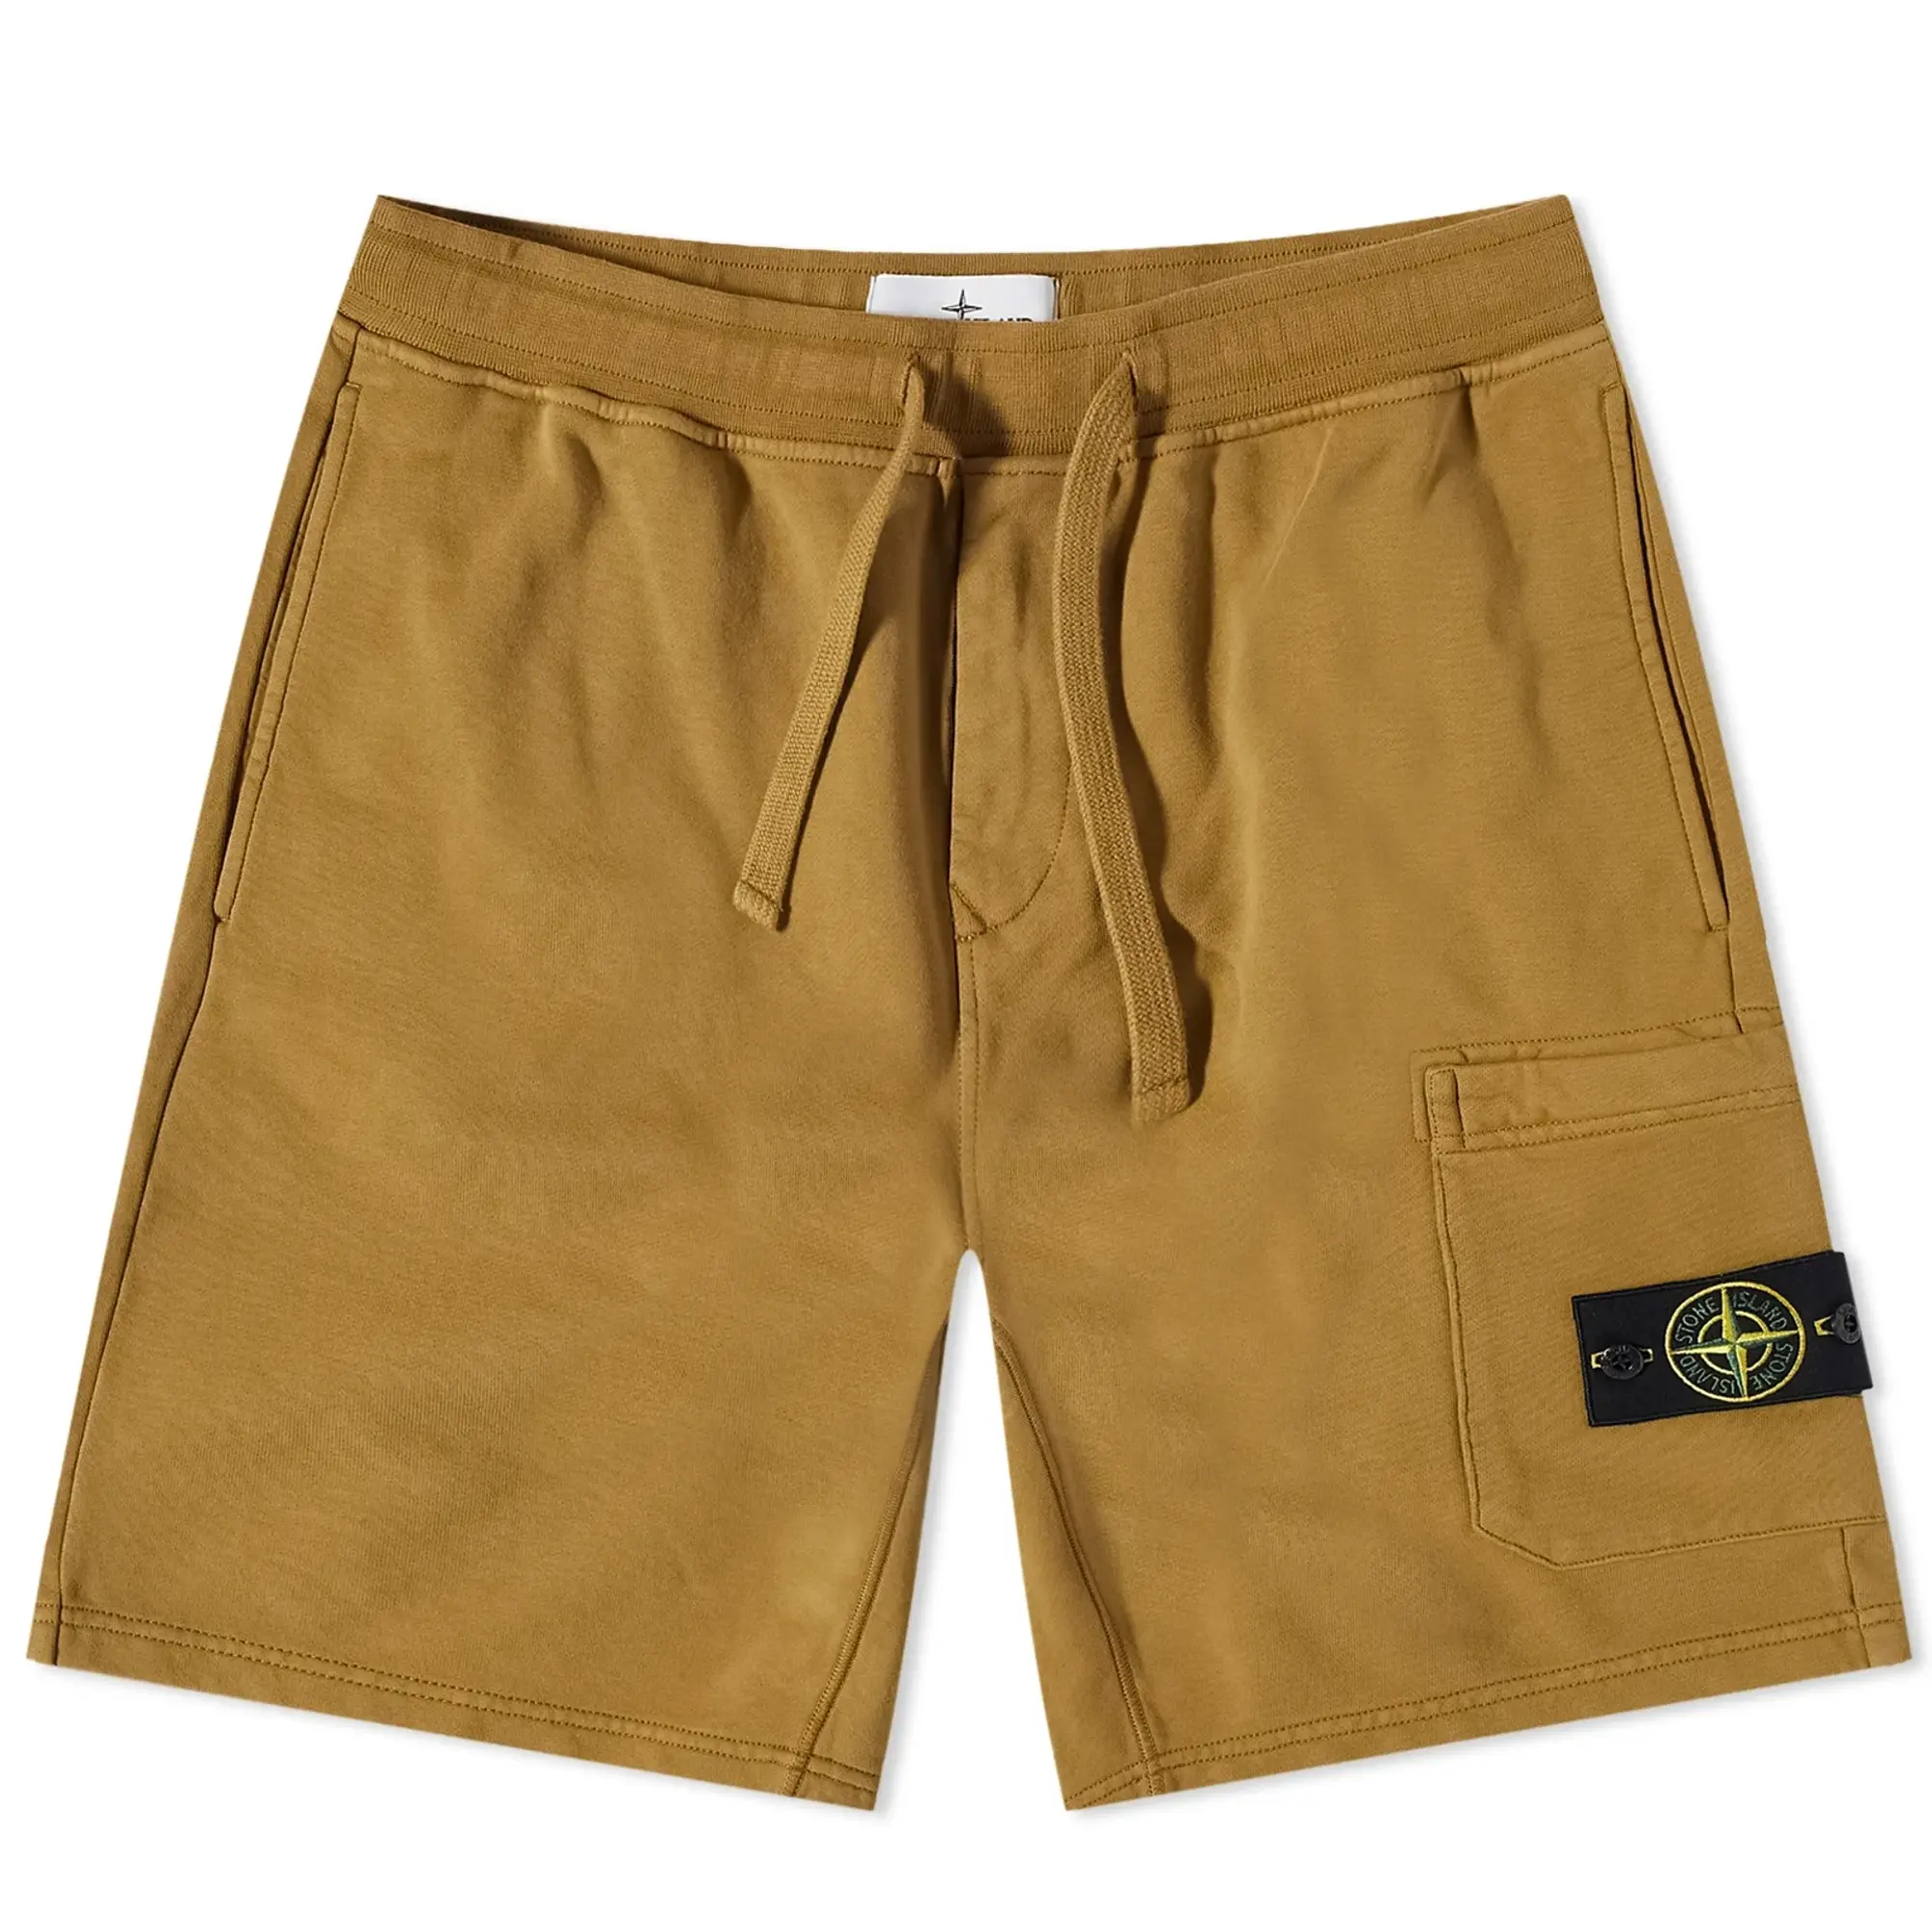 Stone Island Men's Garment Dyed Sweat Shorts Dark Beige